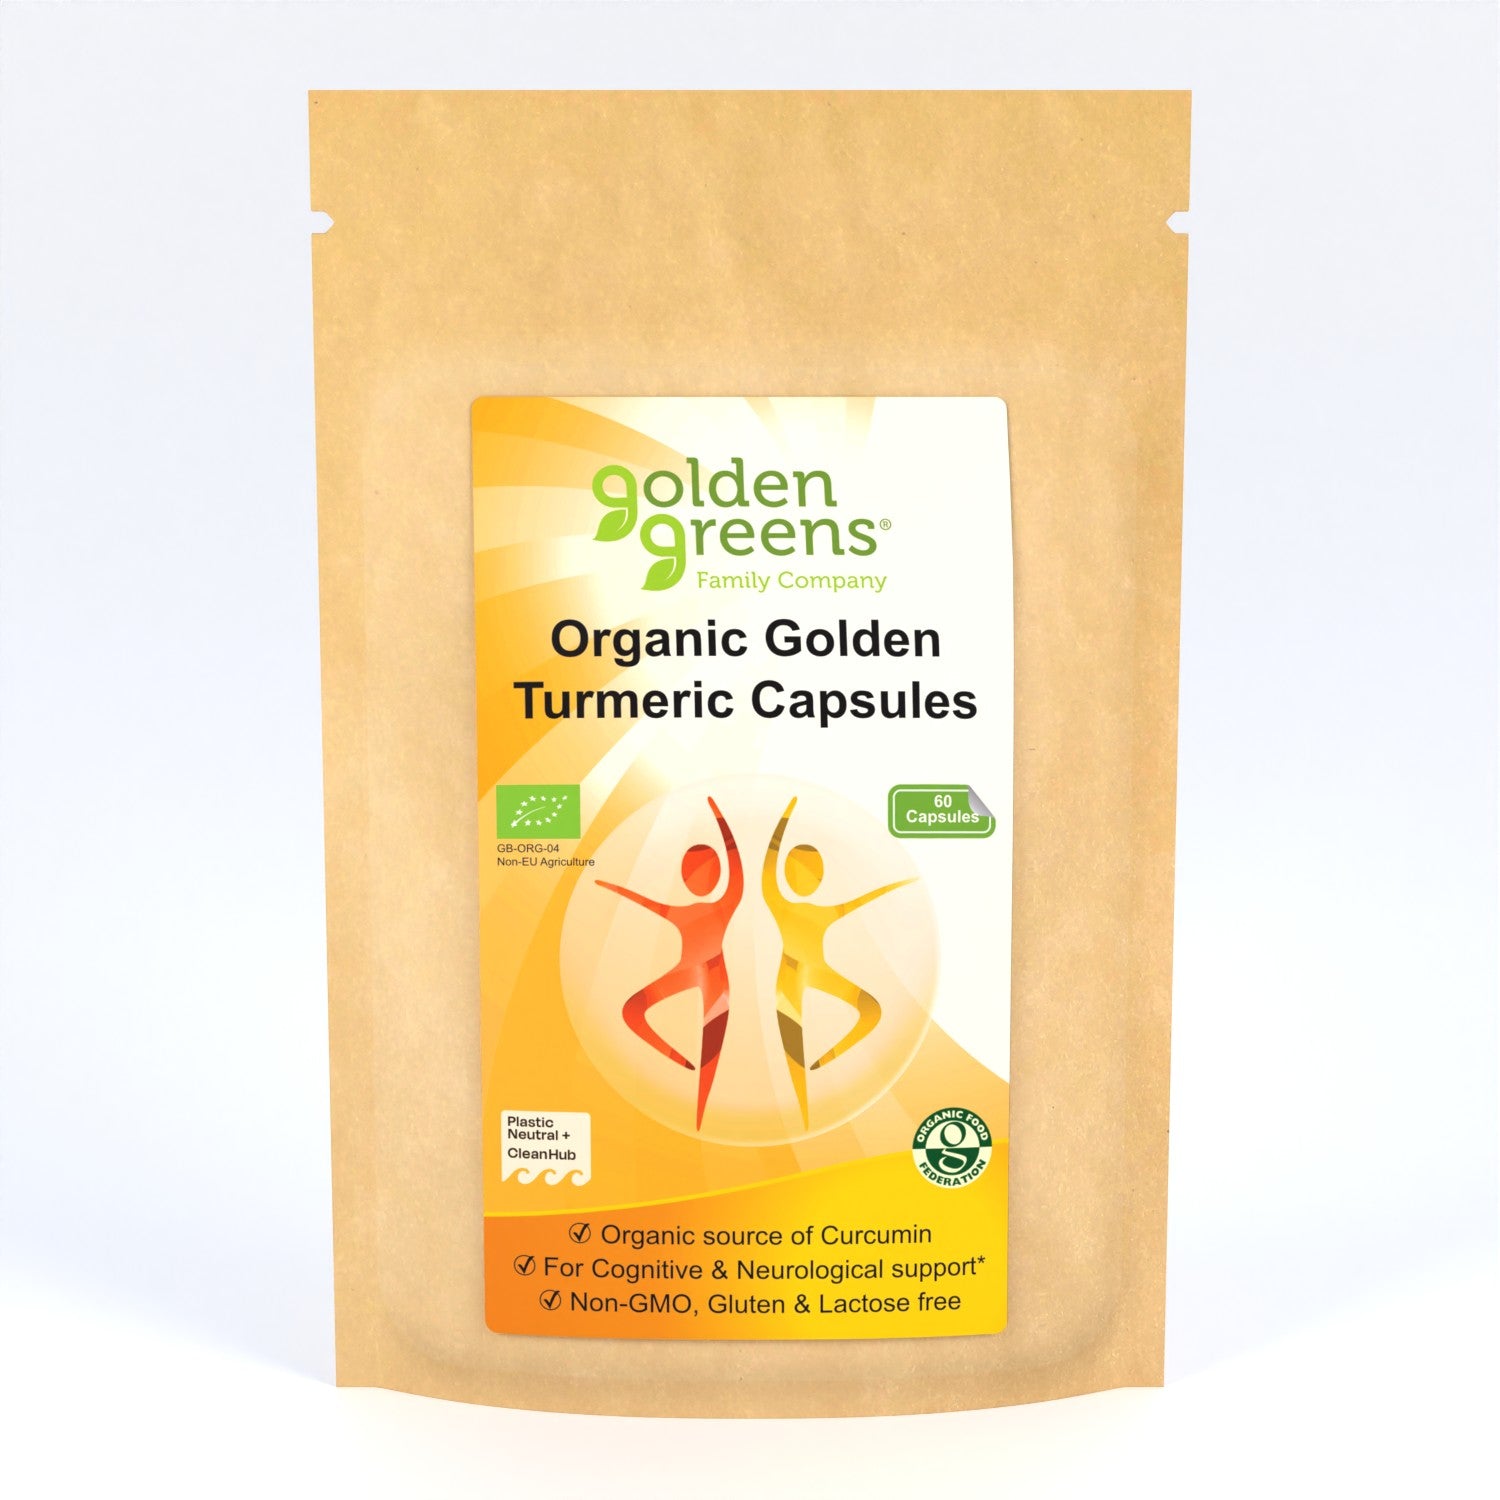 View Organic Golden Turmeric Capsules information